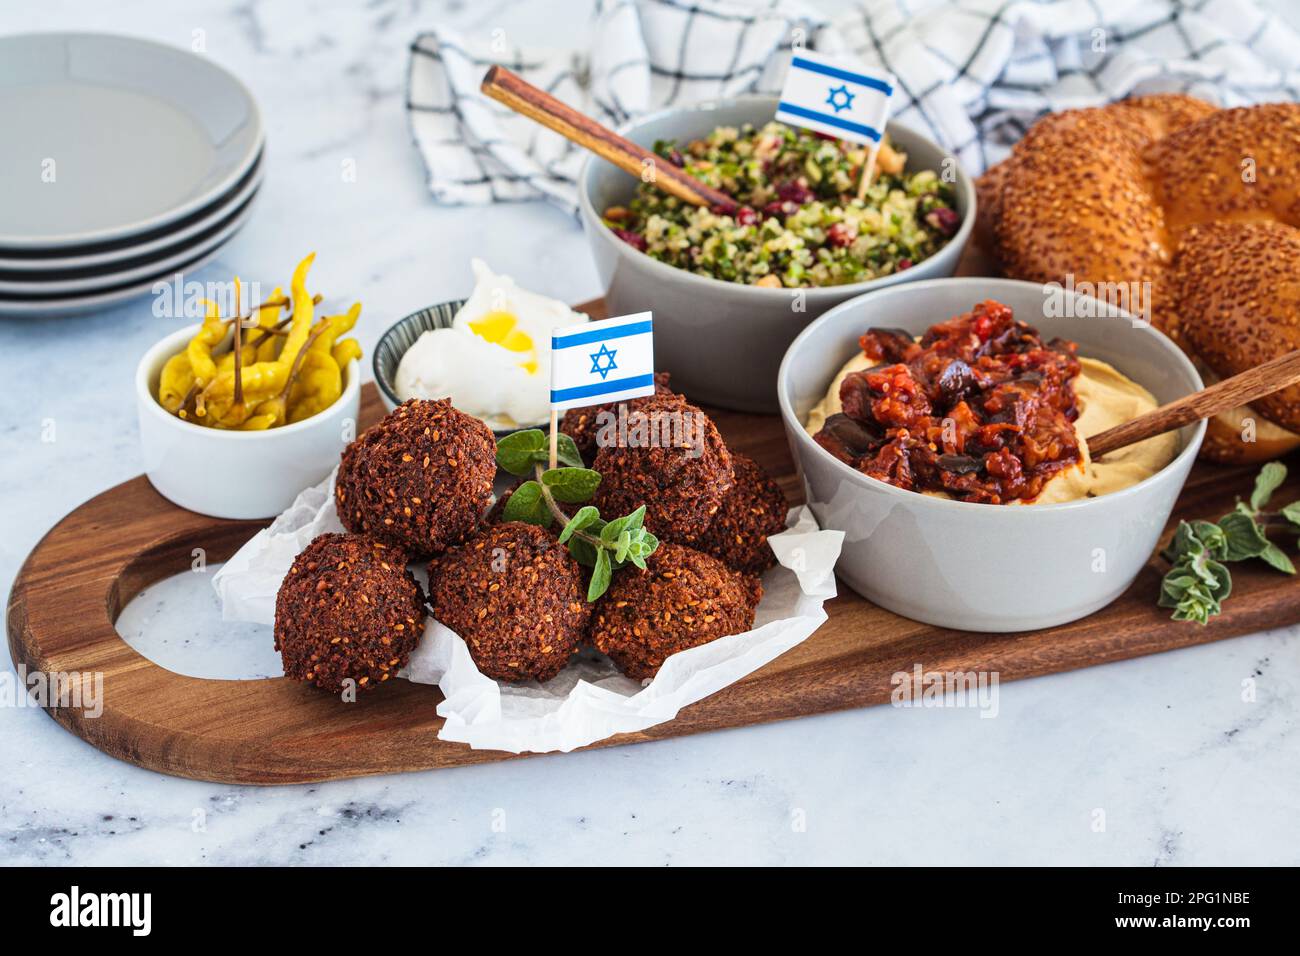 Traditional Shabbat table: challah bread, falafel, quinoa salad, hummus on a wooden board. Israeli food concept. Stock Photo